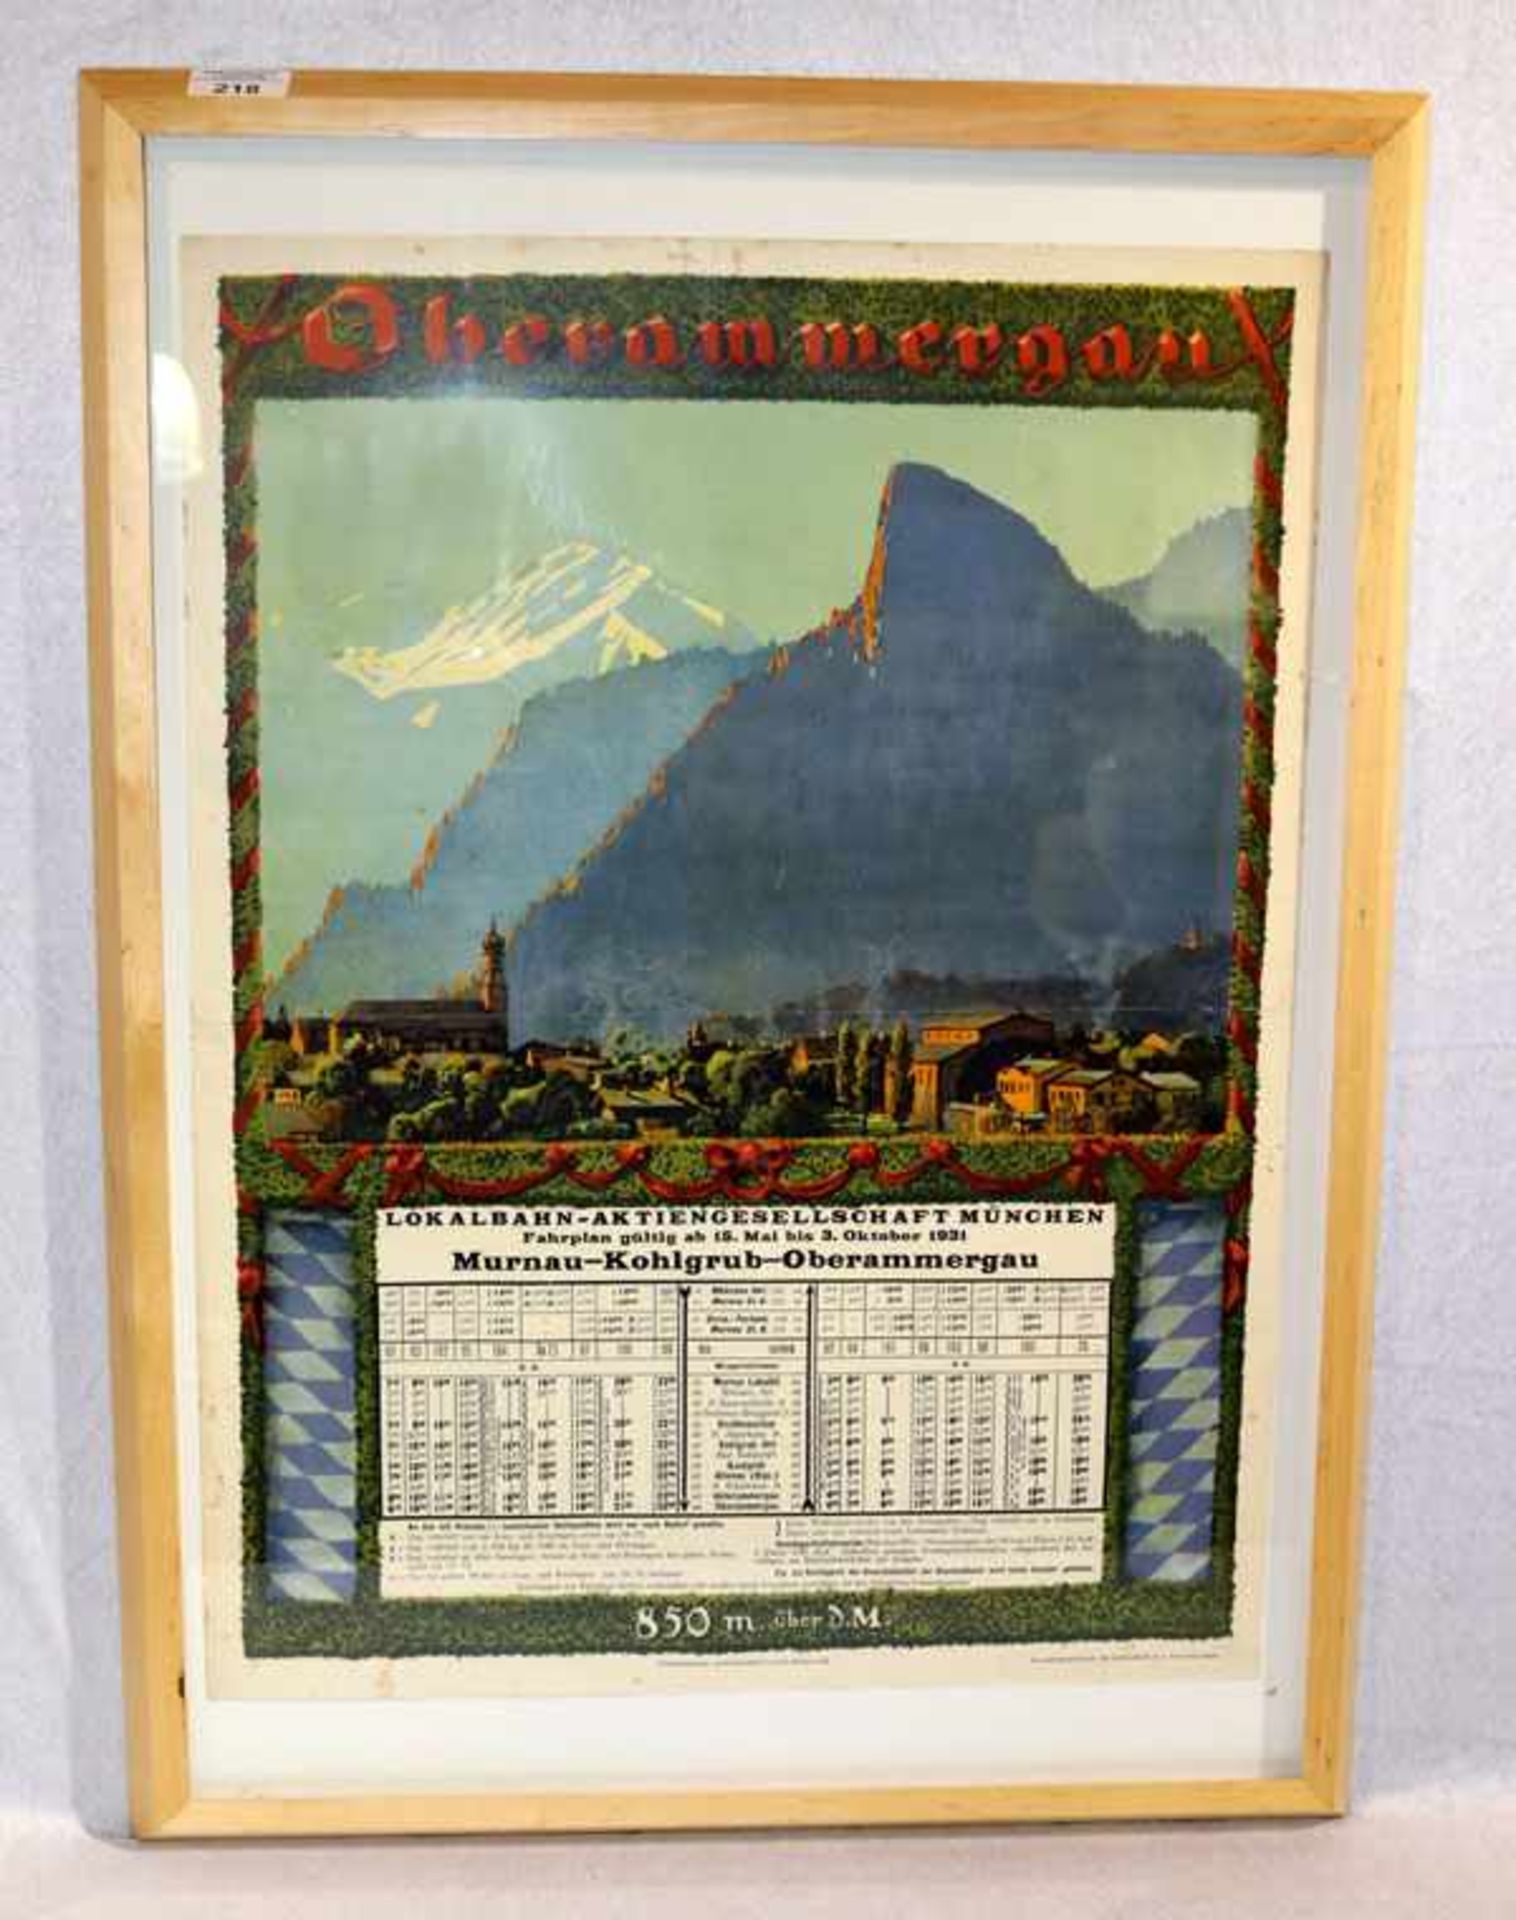 Plakat 'Oberammergau Lokalbahn Fahrplan Murnau-Kohlgrub-Oberammergau', teils fleckig, unter Glas